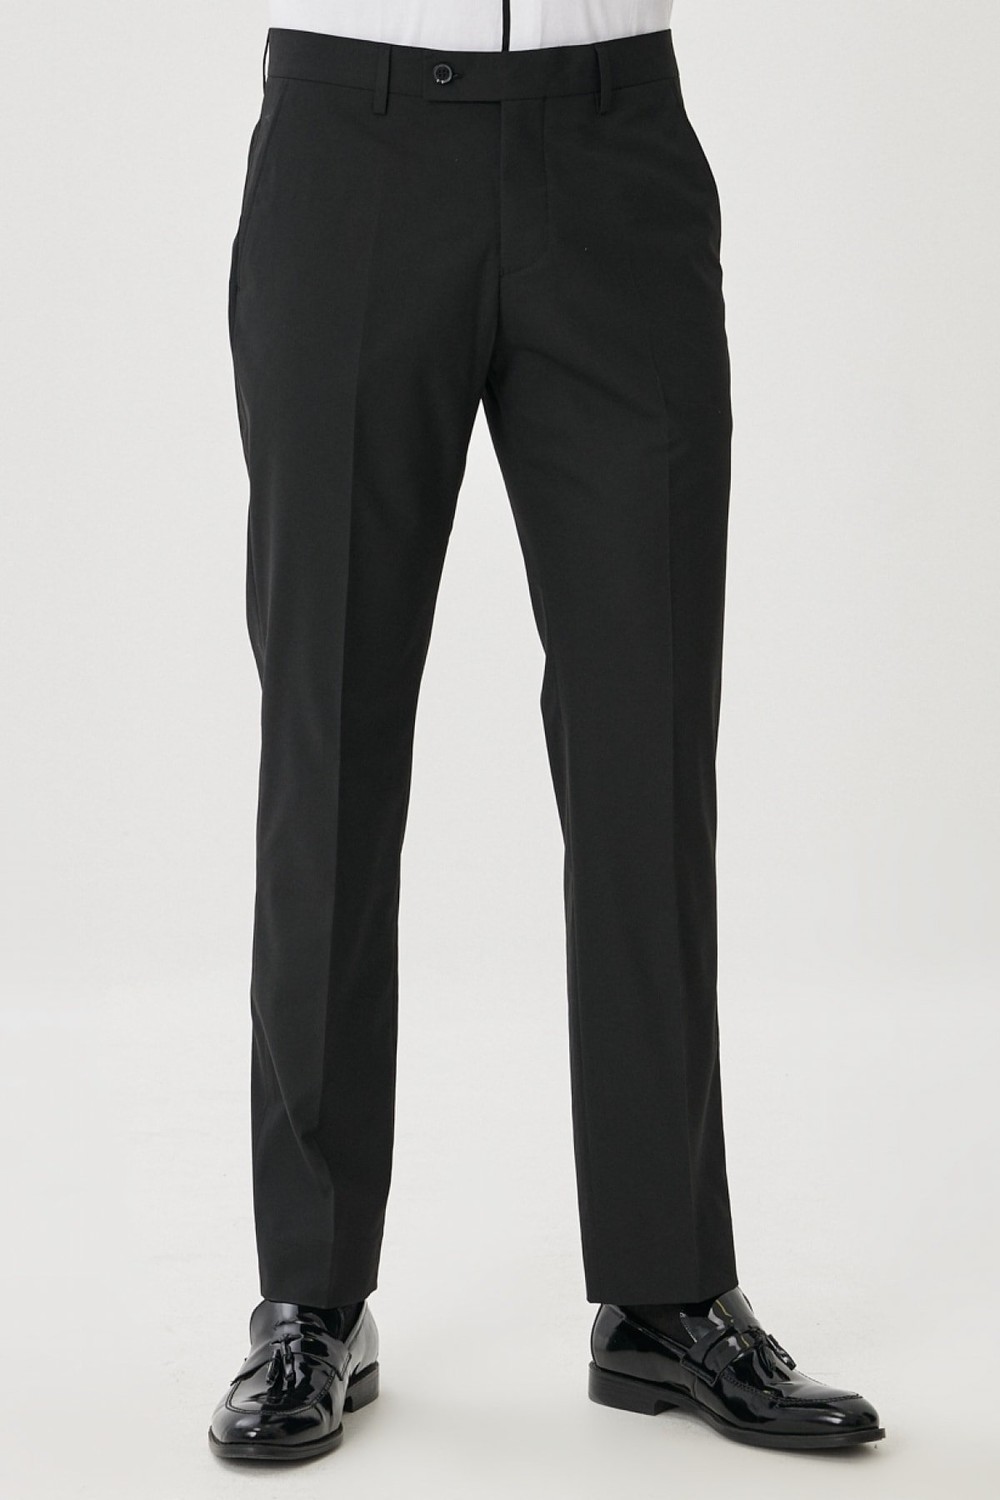 ALTINYILDIZ CLASSICS Men's Black Regular Fit Normal Cut, Flexible Trousers with Side Pockets.